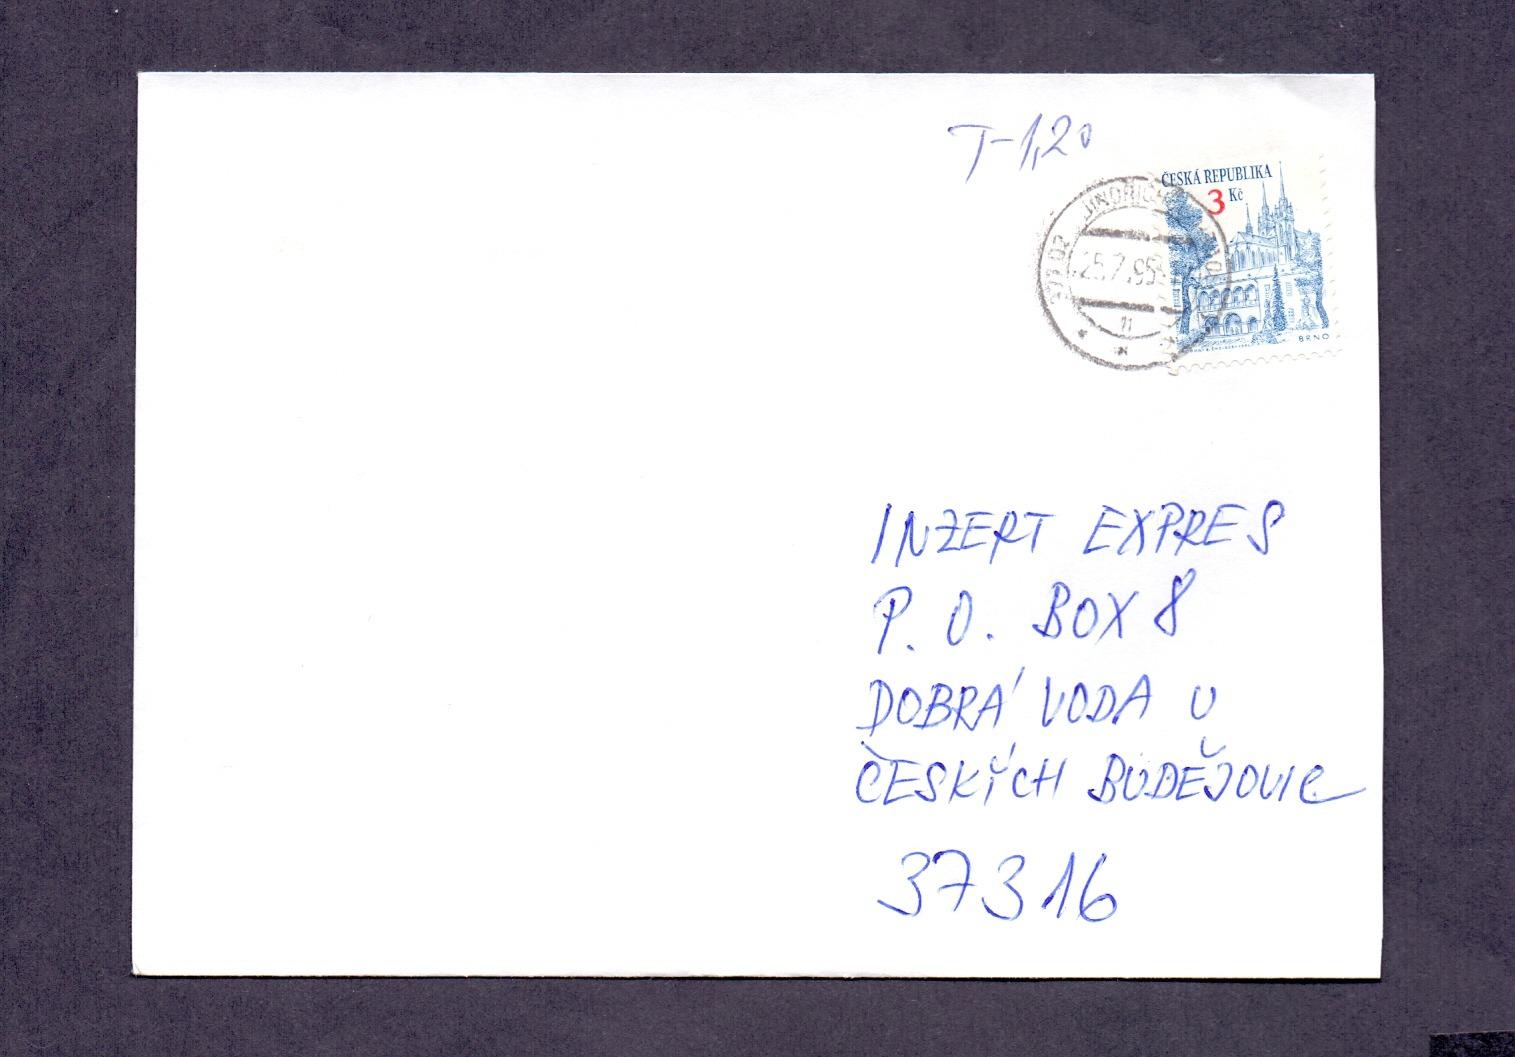 SR, J.Hradec, 25.7.1995, T-1,20 - Filatelia